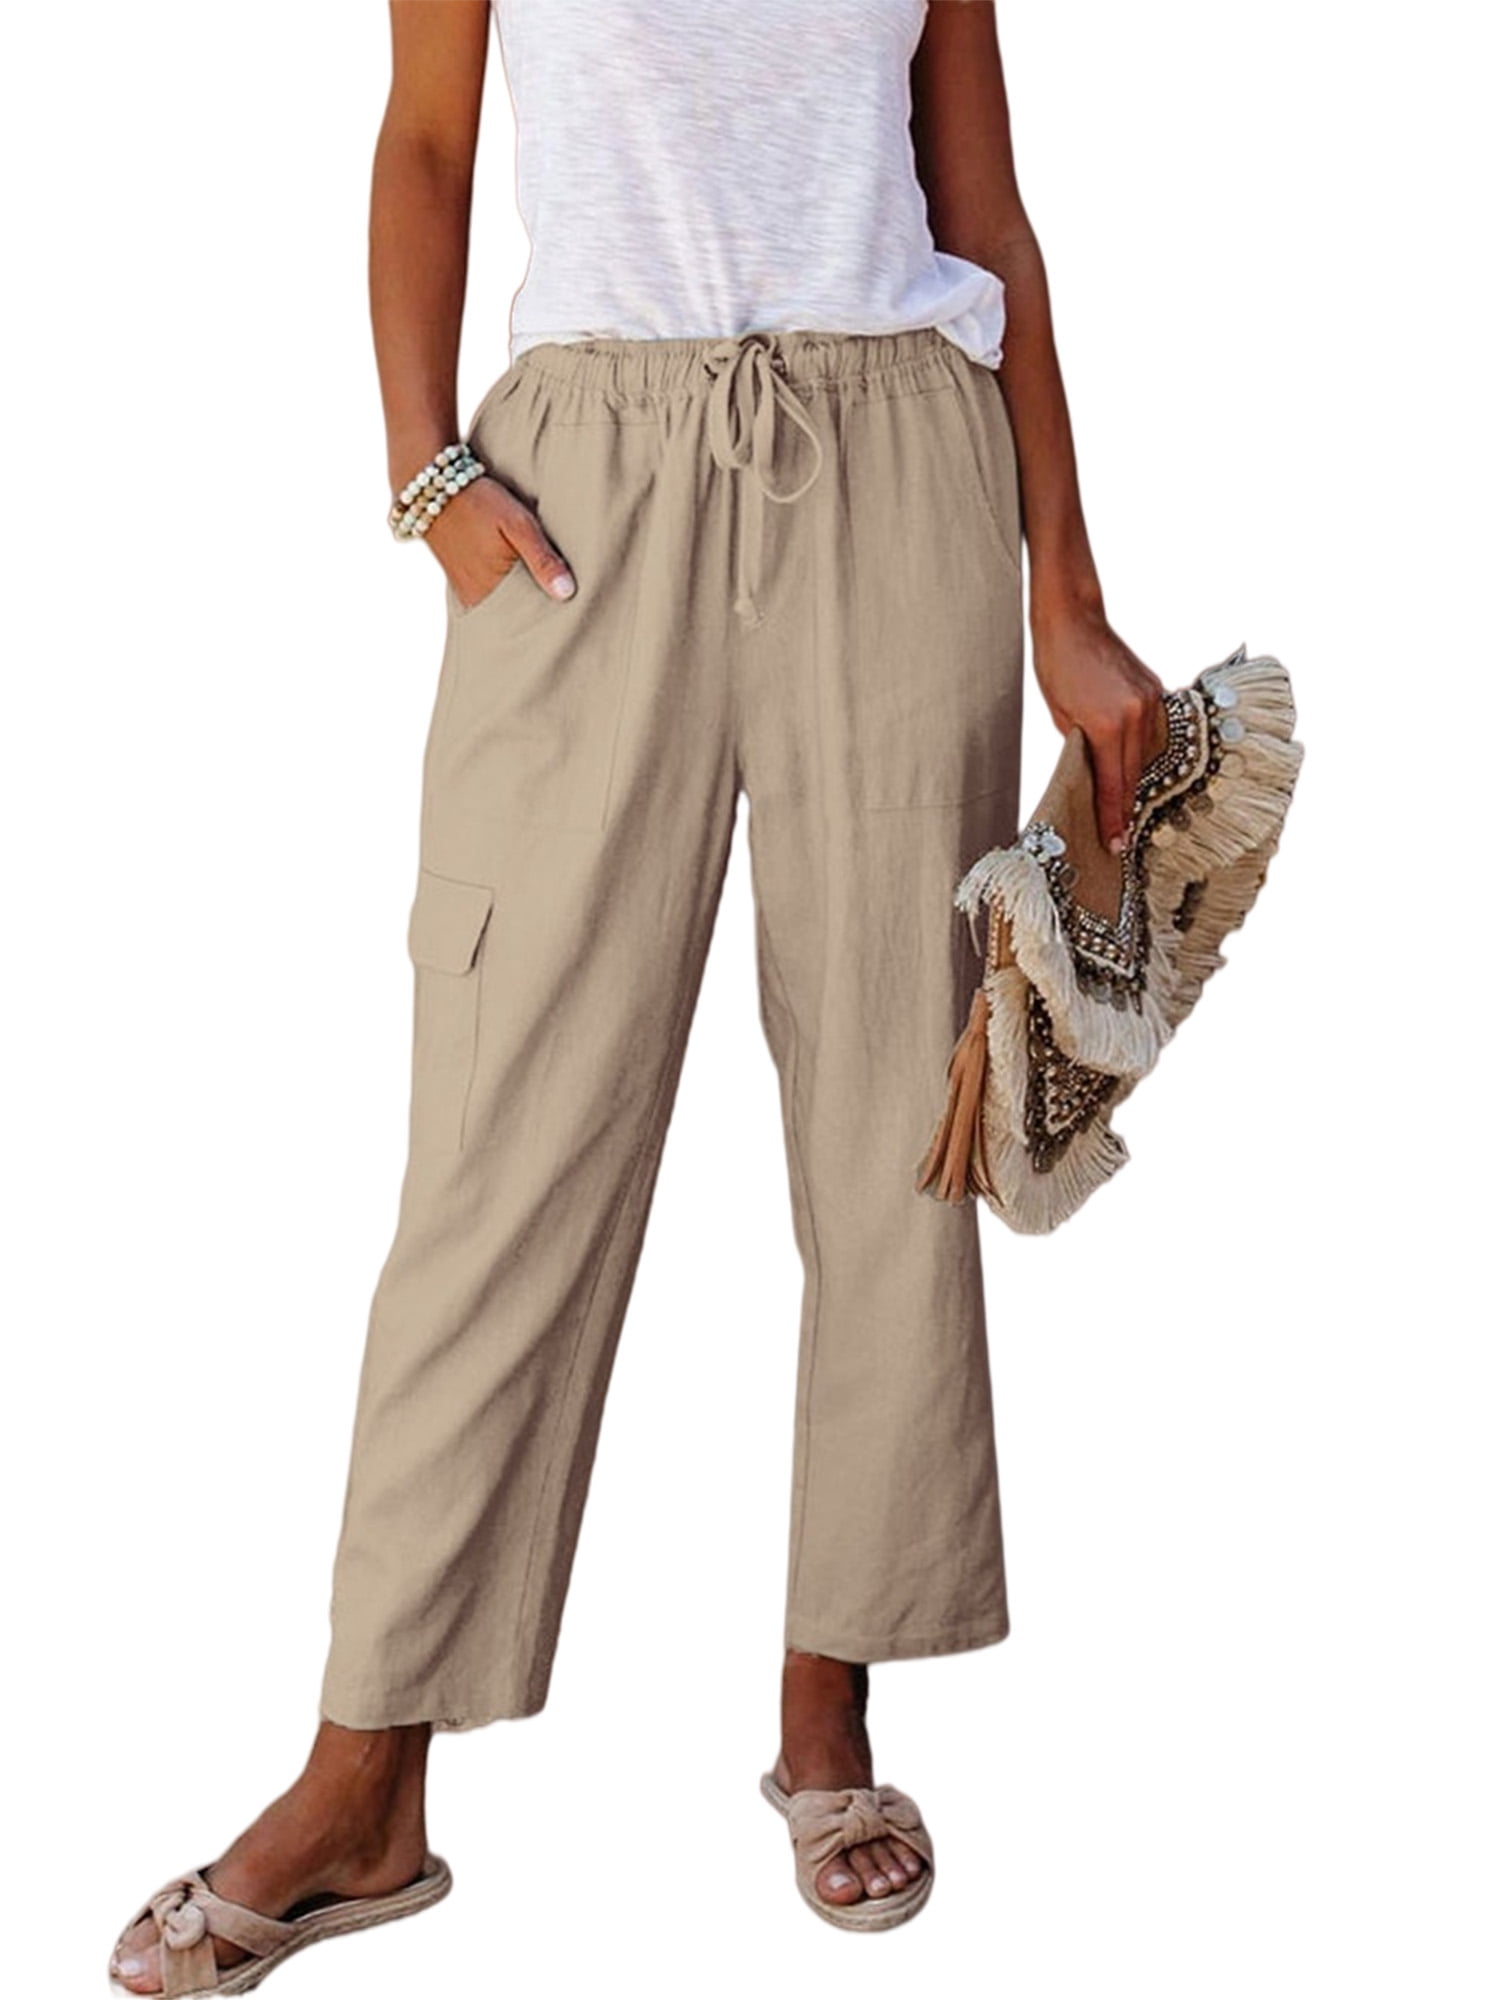 Women Retro Pants Gift For Her Casual Pants Solid Color Pants Loose Harem Pants Cotton Pants Splicing Pockets Pants Simple Pants